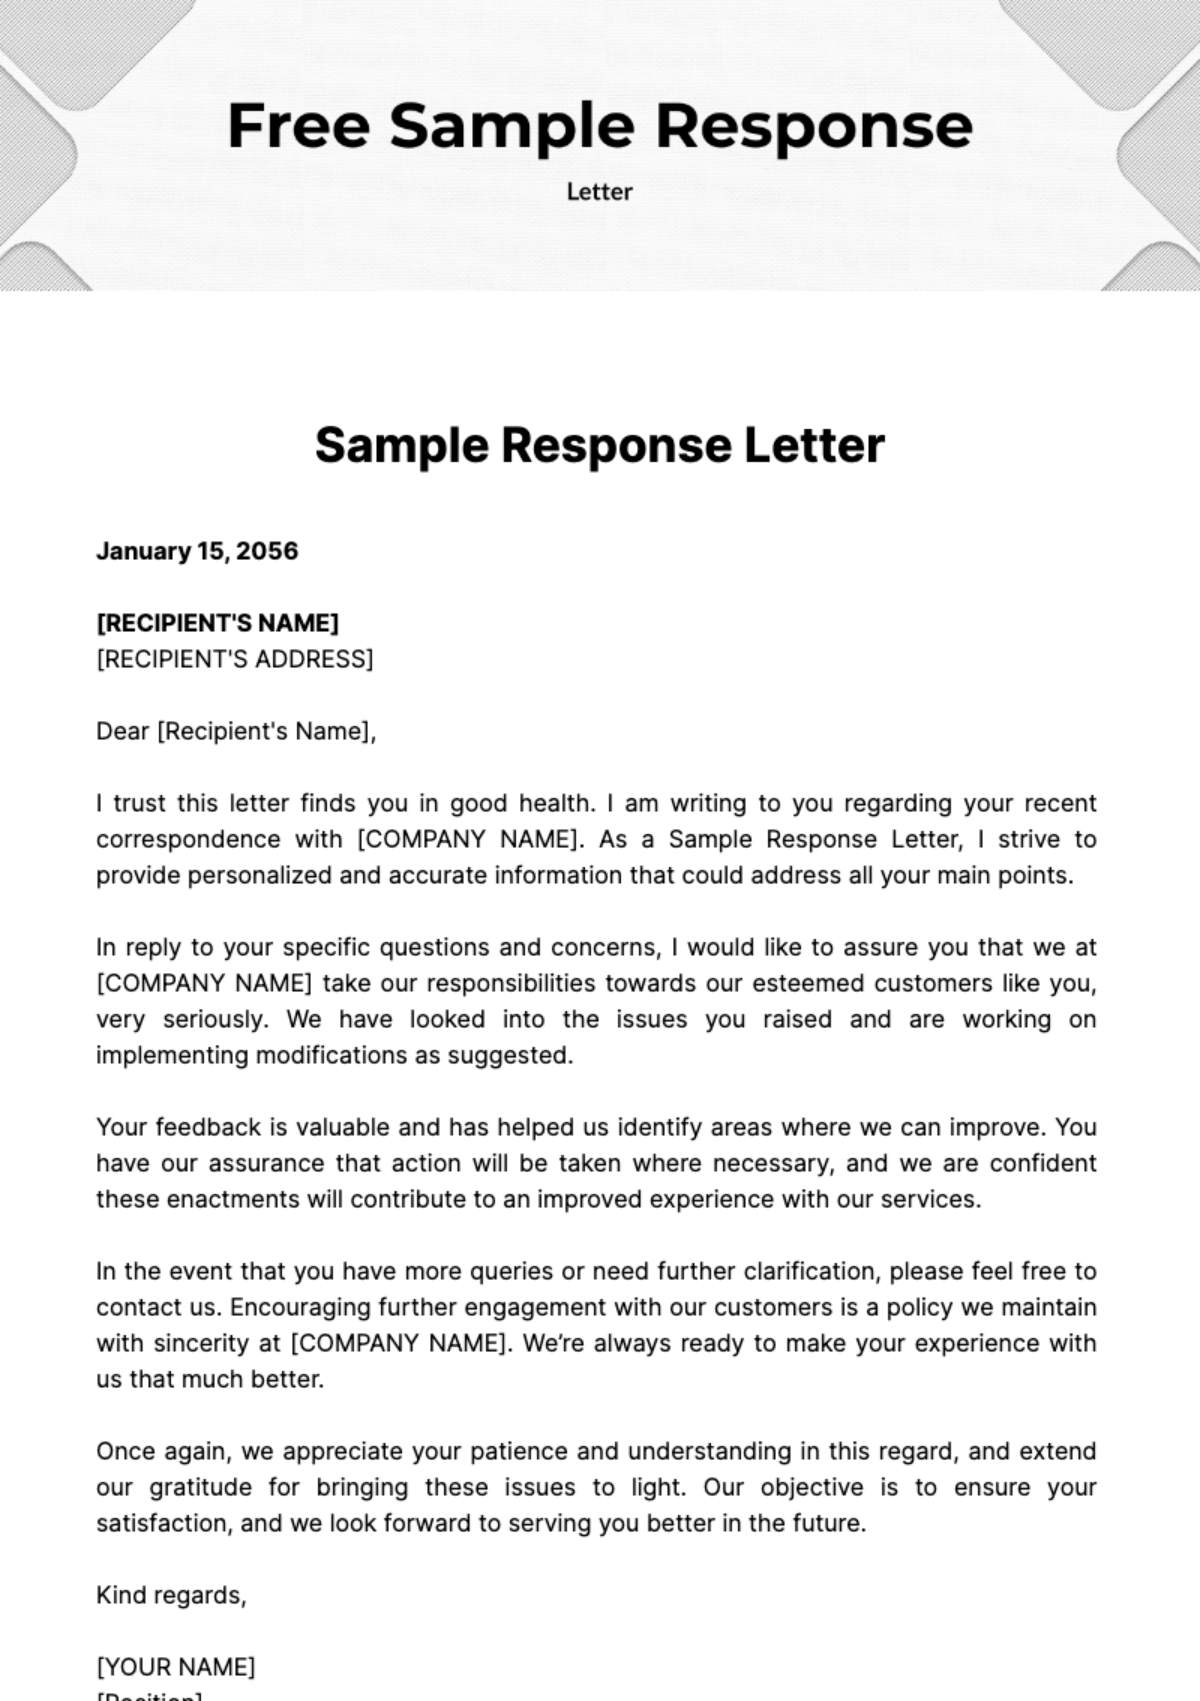 Free Sample Response Letter Template